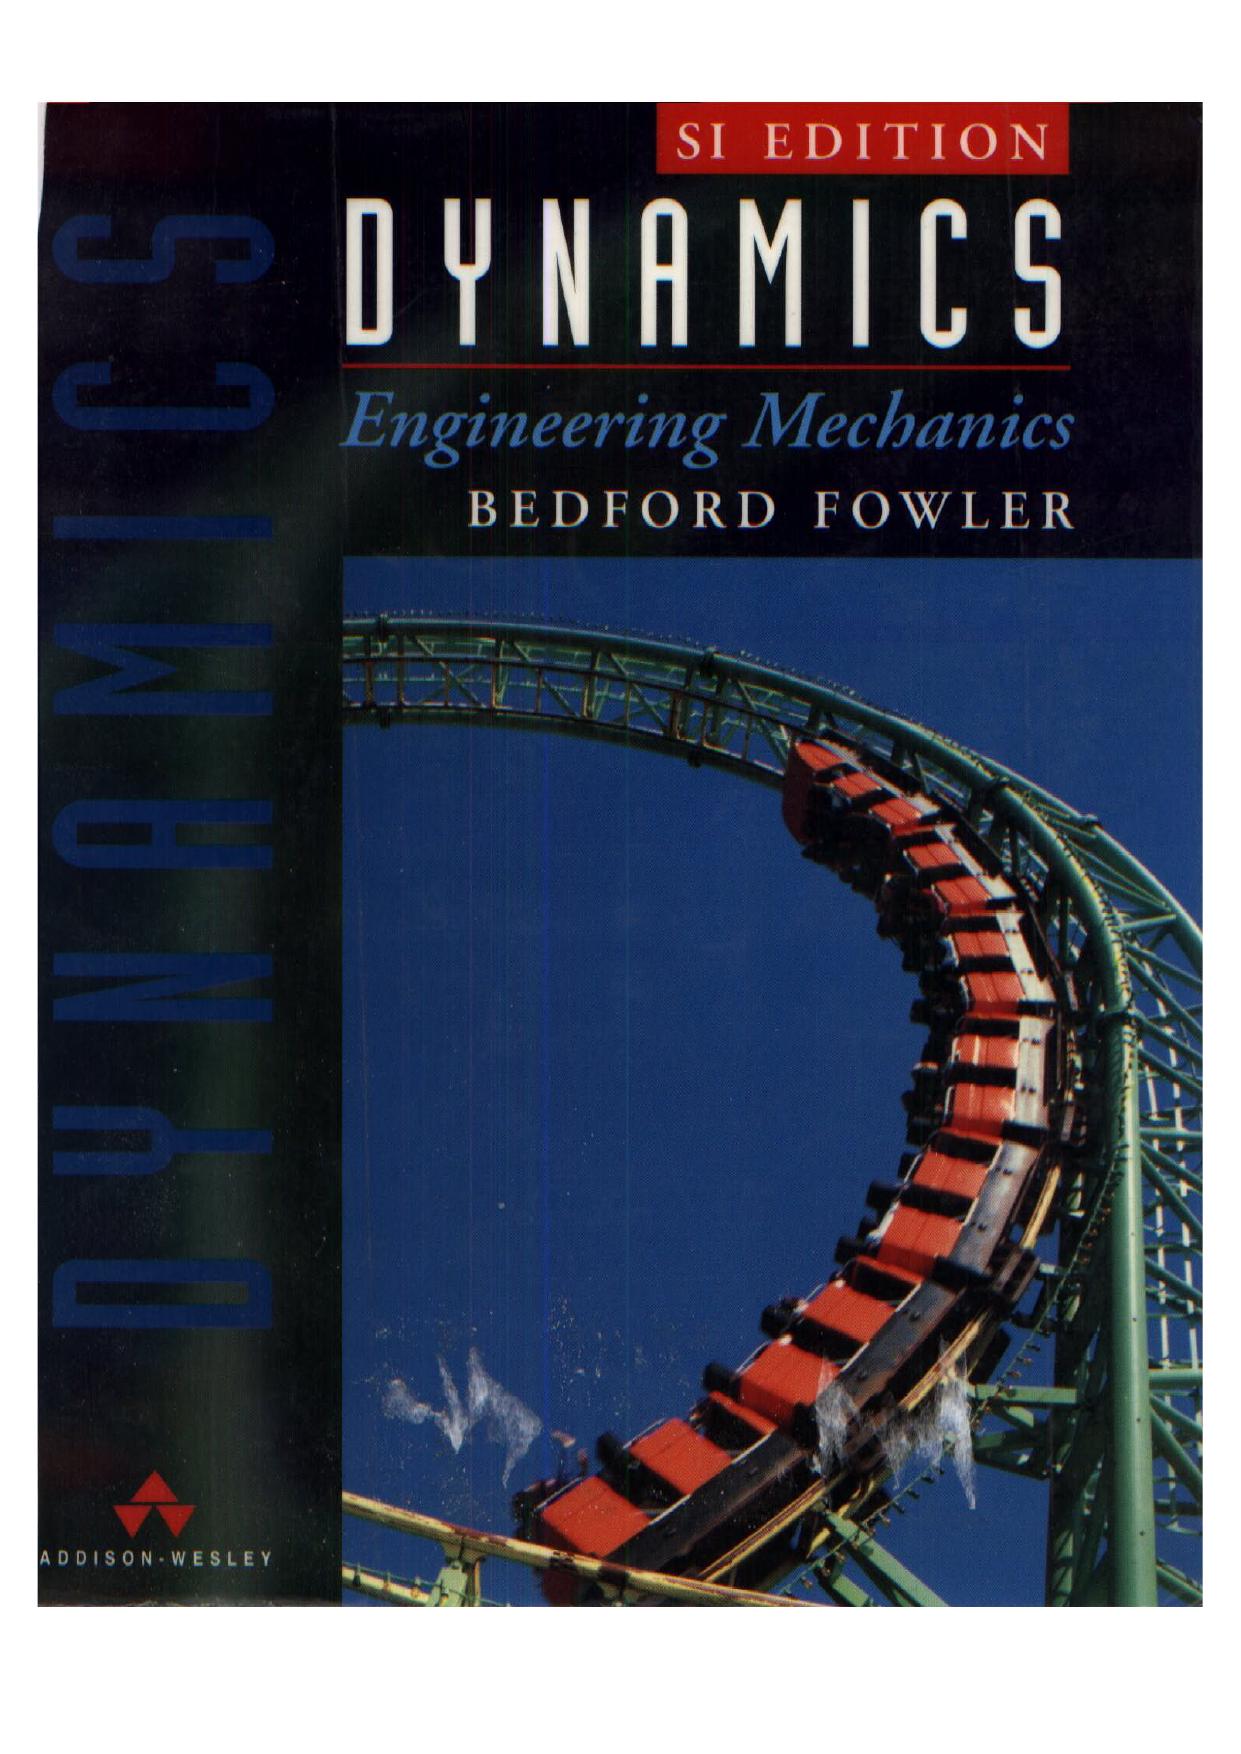 Bedford,Fowler - Dynamics